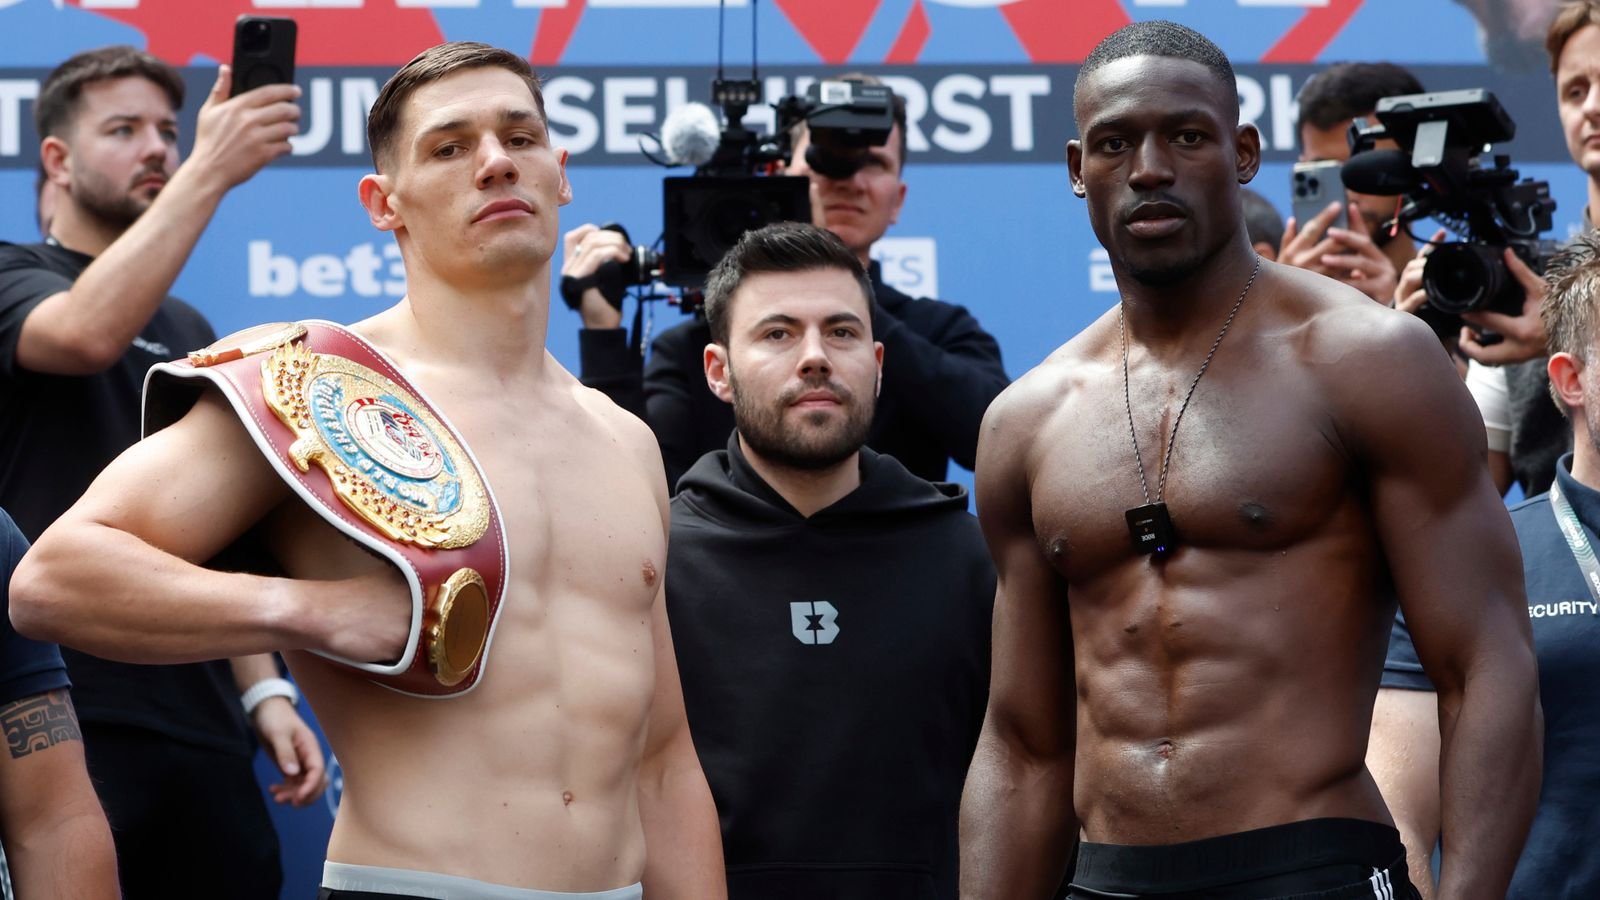 Billam-Smith vs Riakporhe – who wins? Expert predictions ahead of the WBO cruiserweight world championship clash | Boxing News